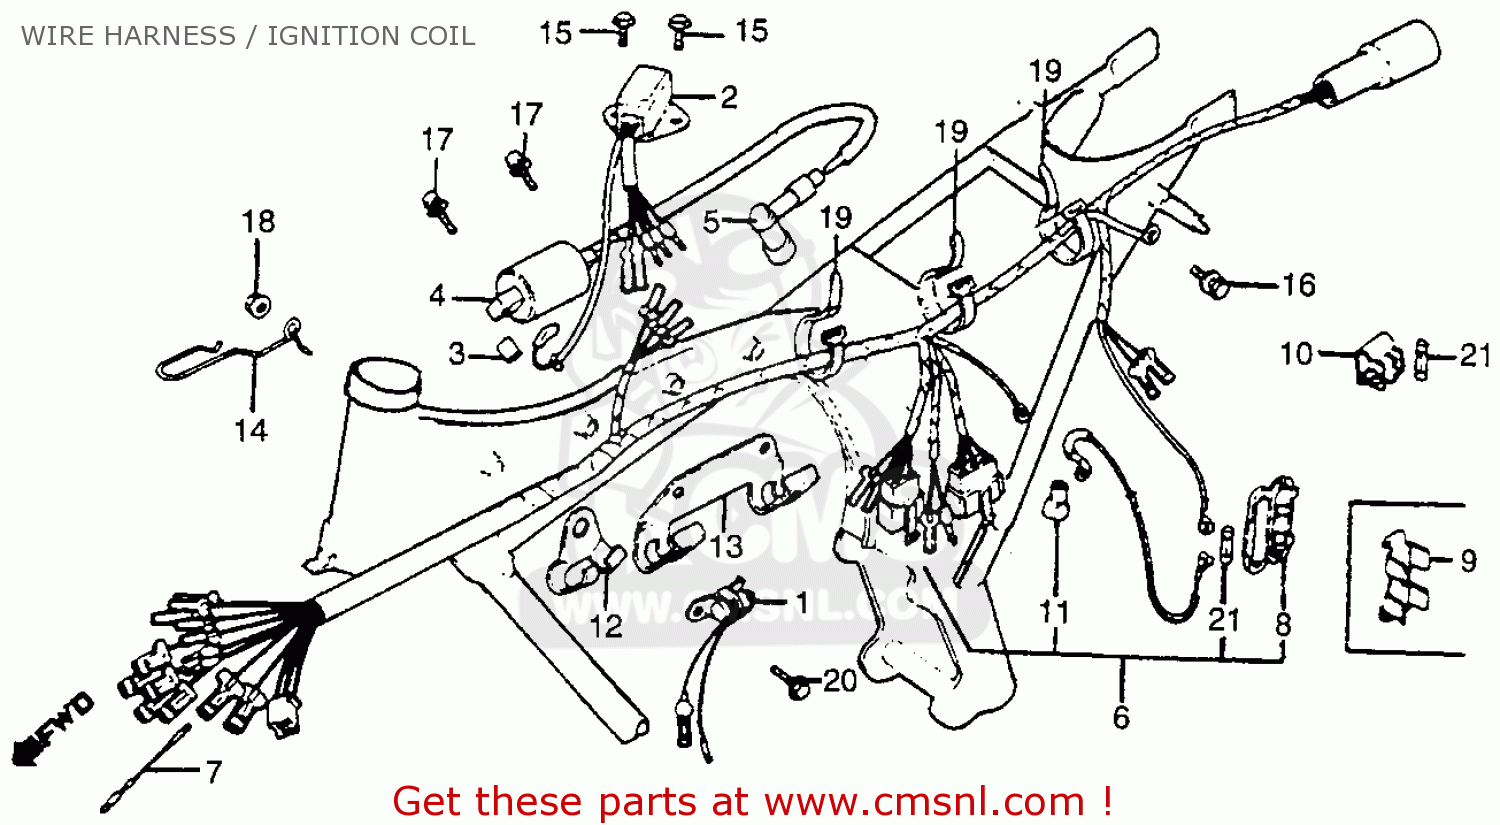 1980 Honda Cb125s Wiring Diagram - Wiring Diagram